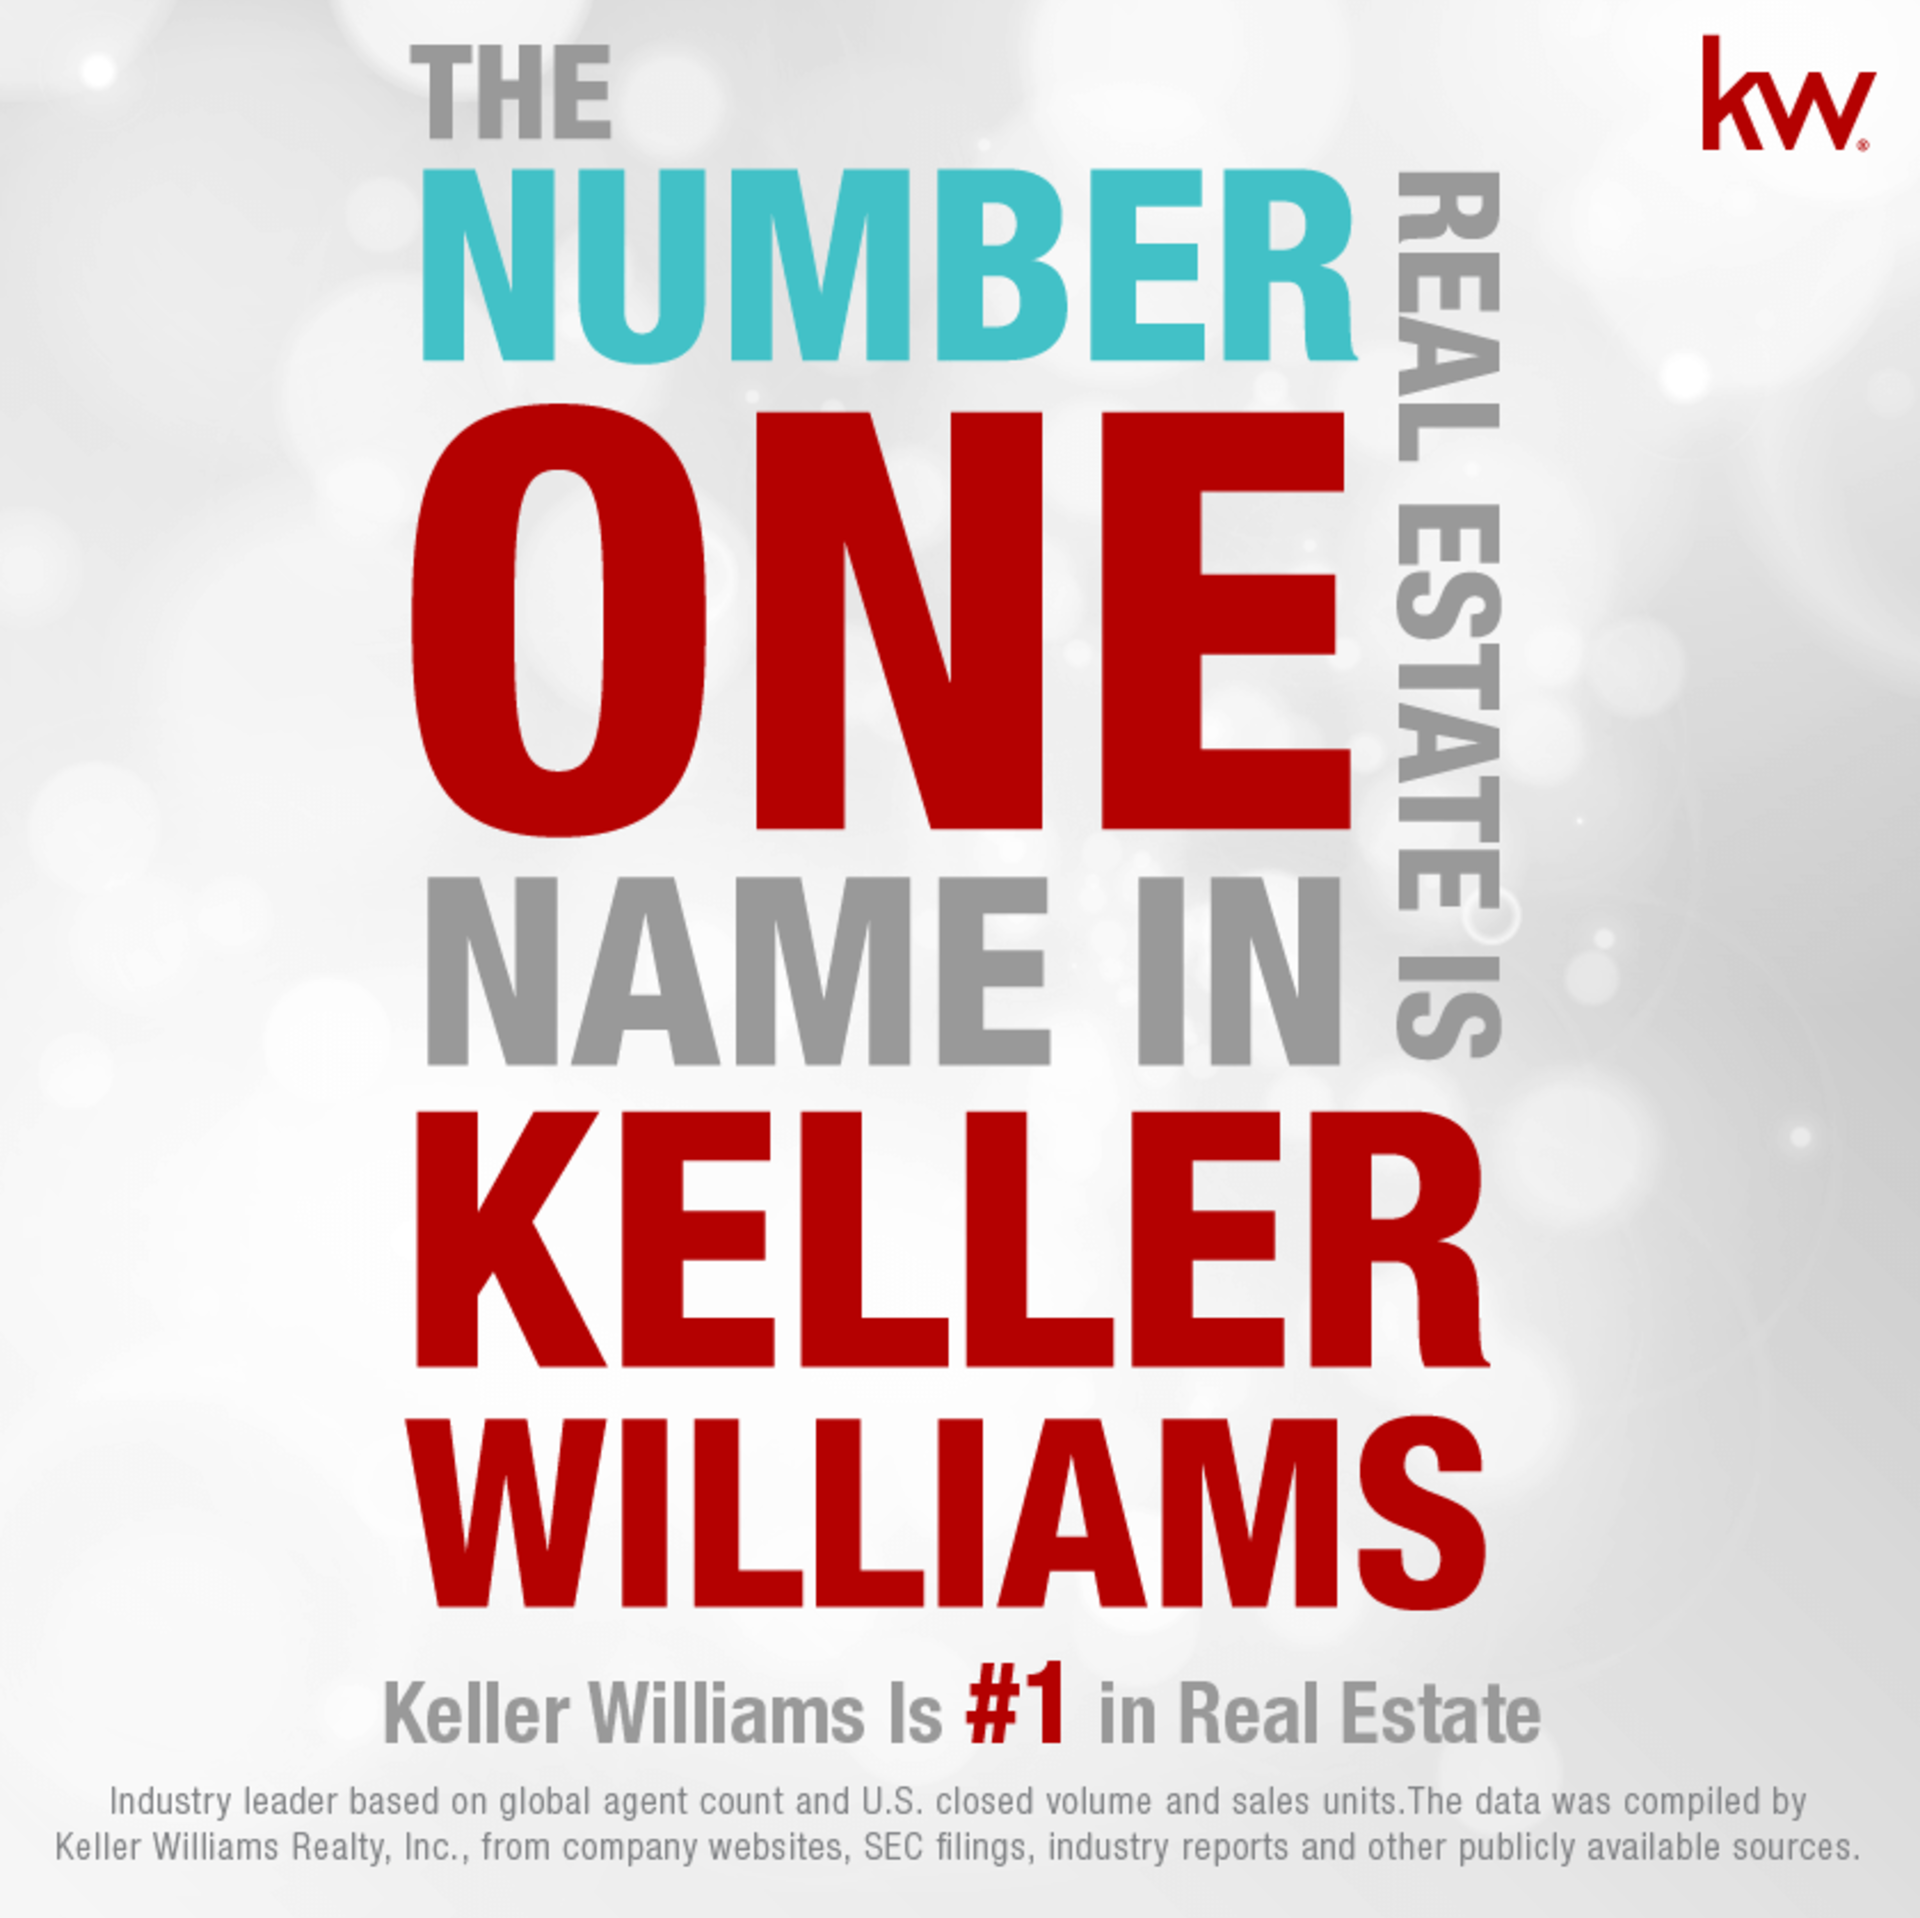 Keller Williams Is #1!